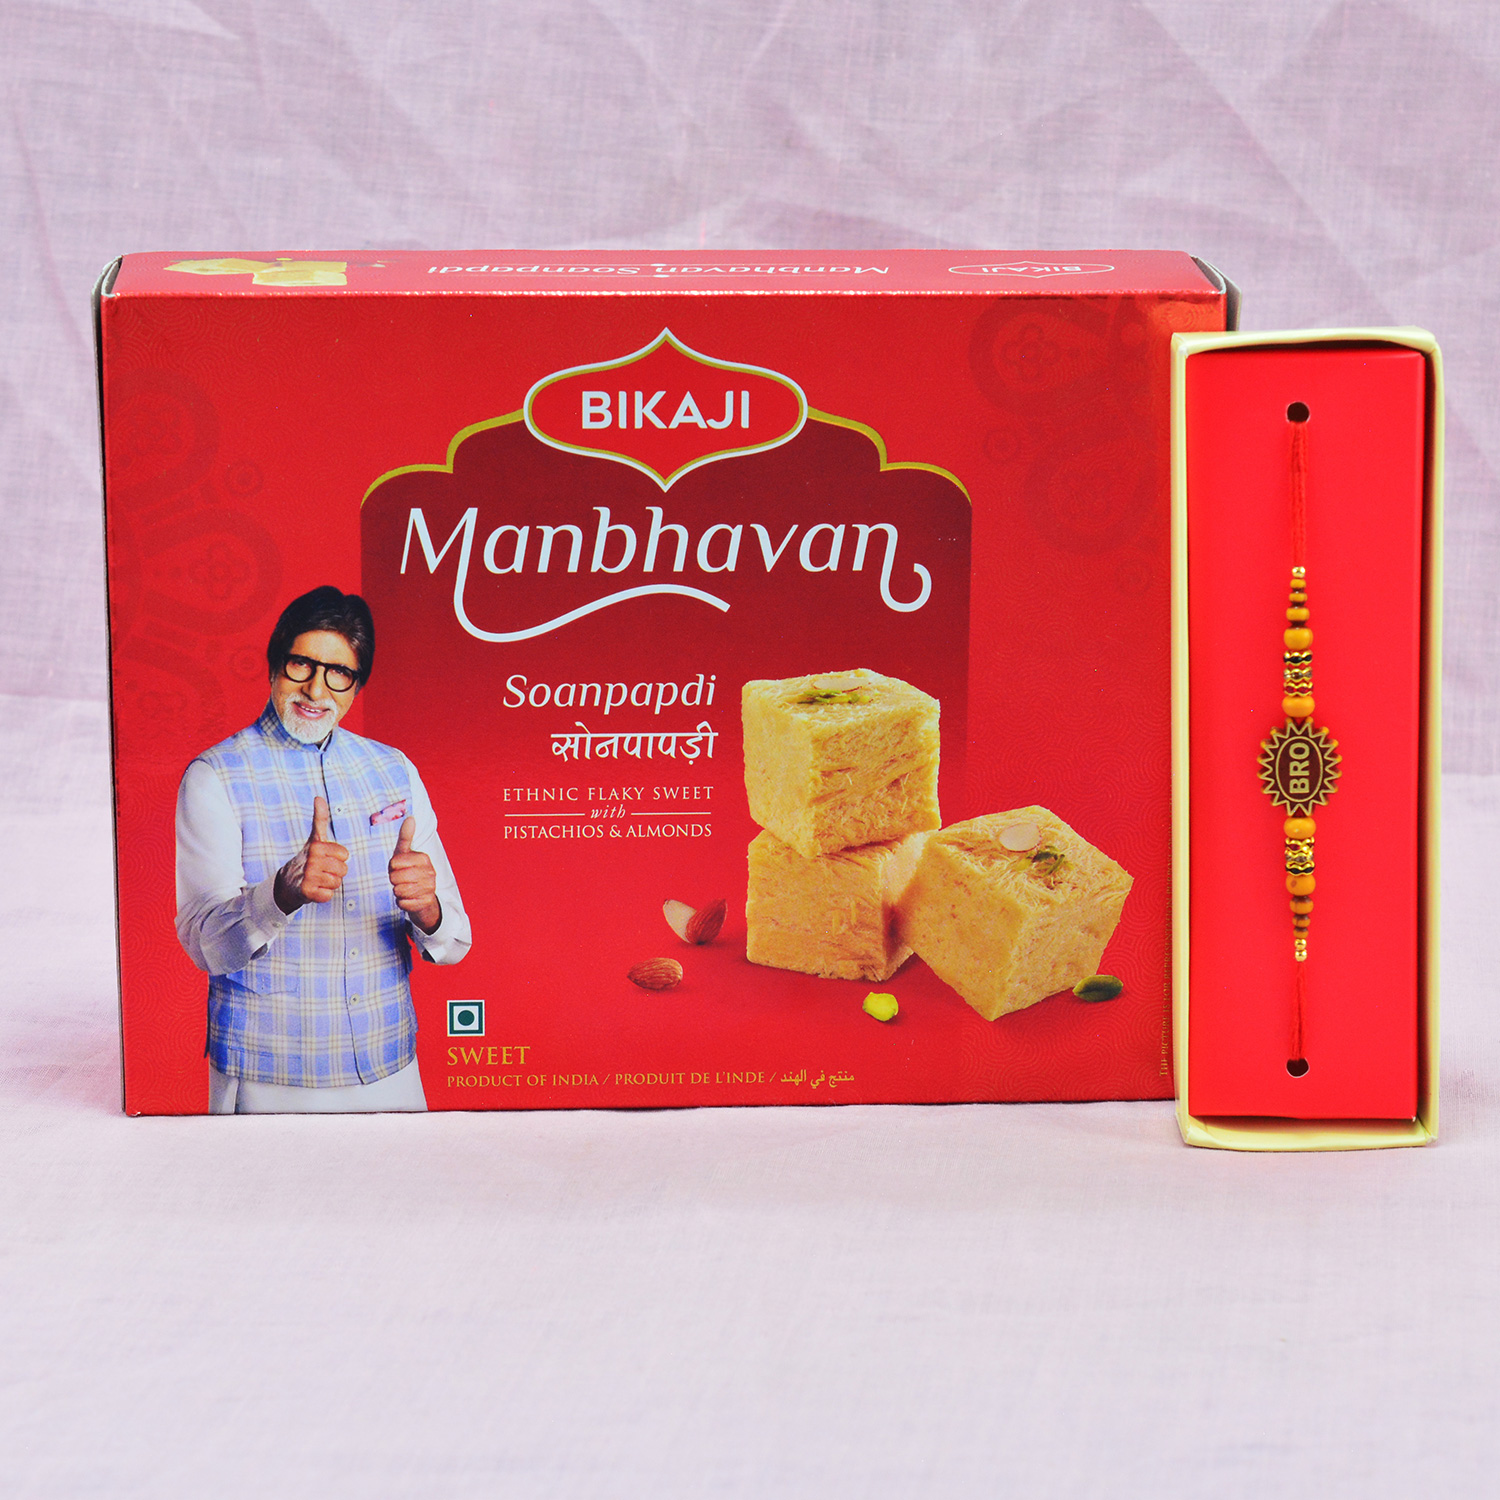 Amazing Sandalwood Bro Rakhi with flavorsome Bikaji Manbhavan Soanpapdi